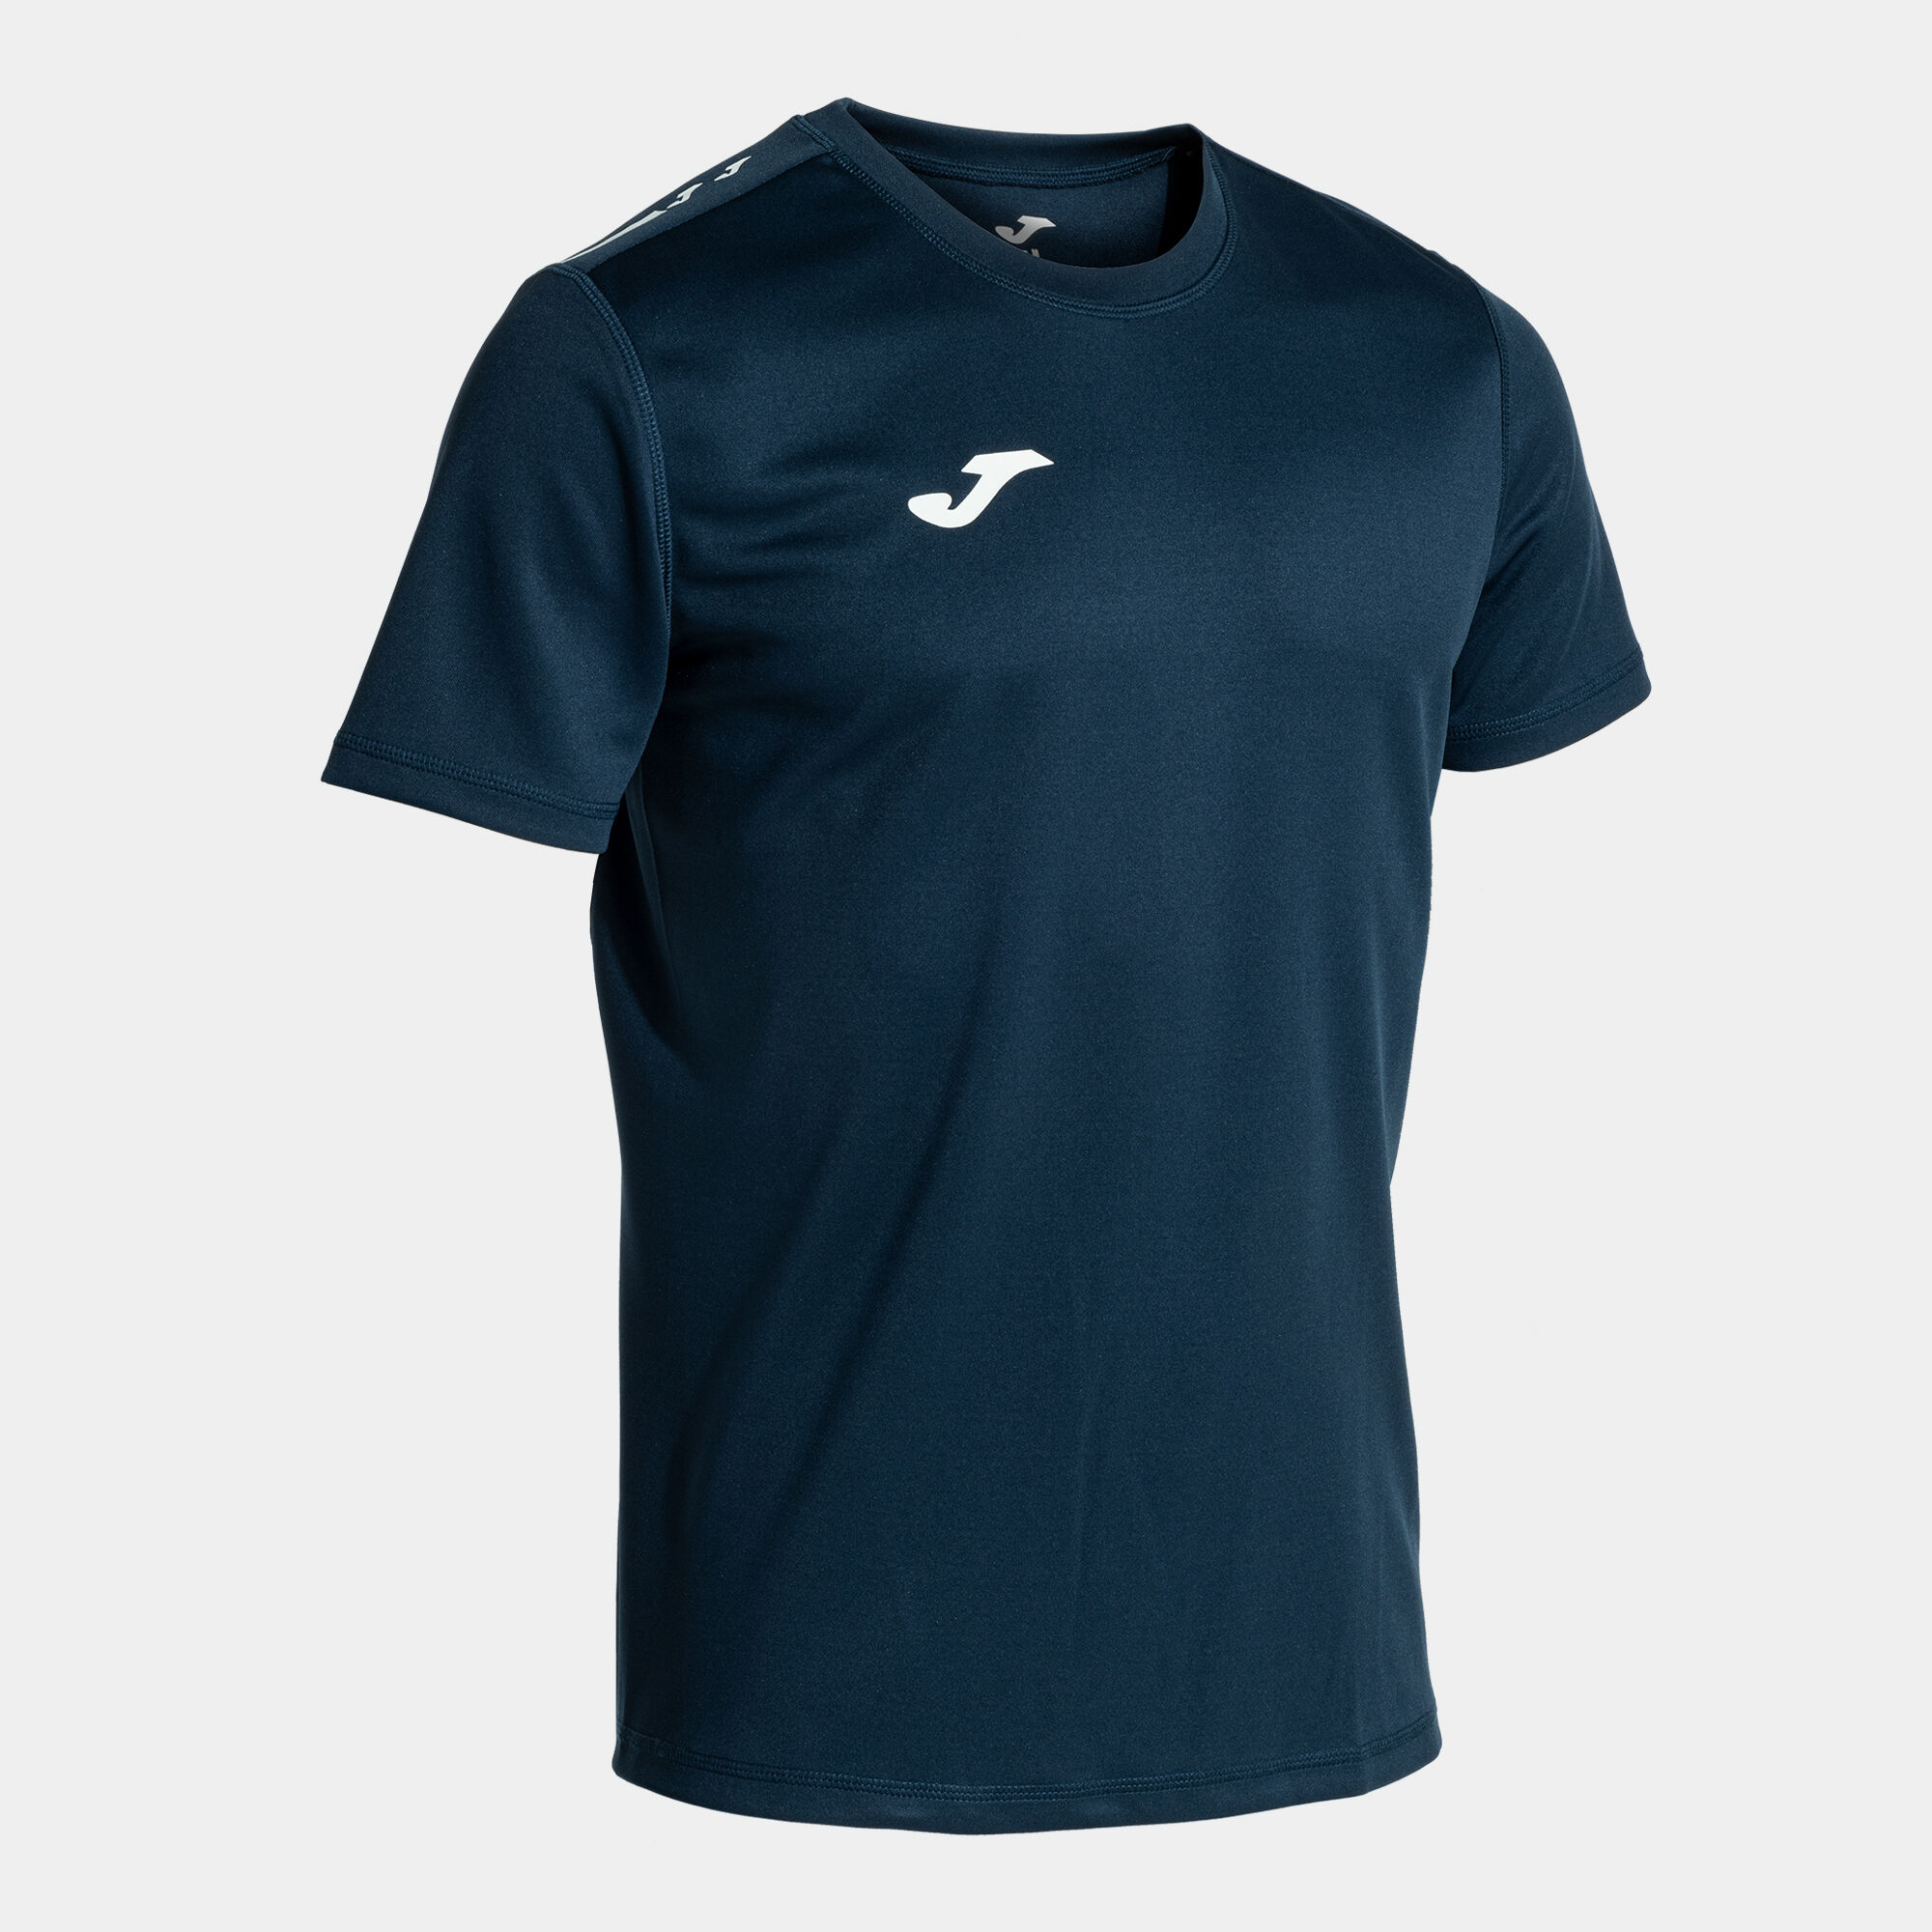 Shirt short sleeve man Olimpiada rugby navy blue